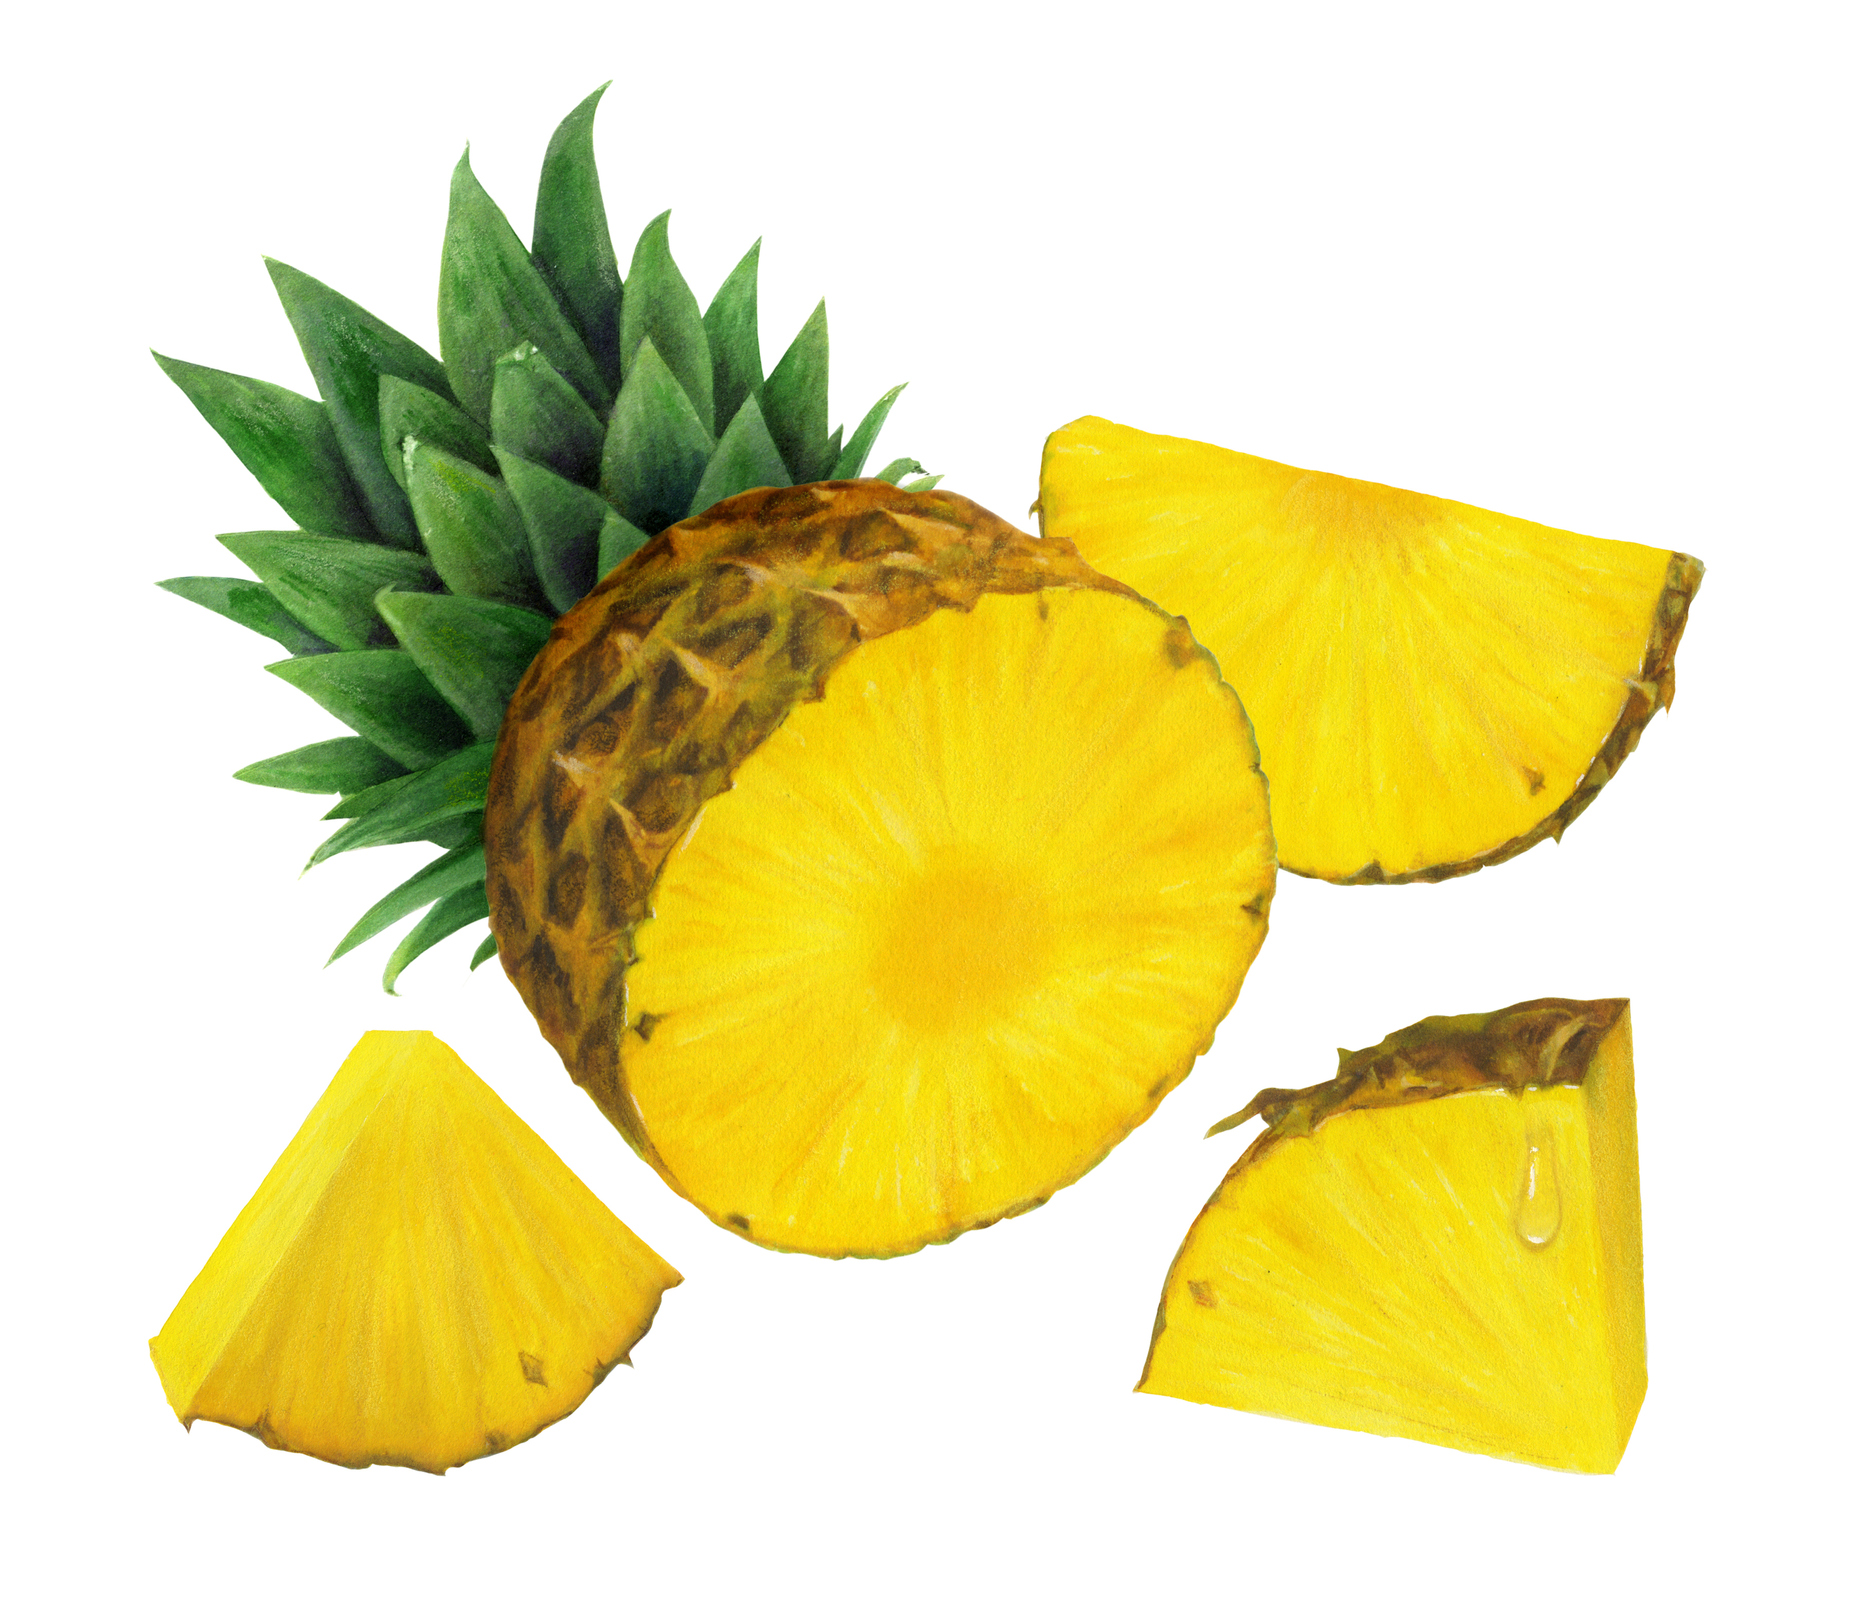 Pineapple Half and Wedge